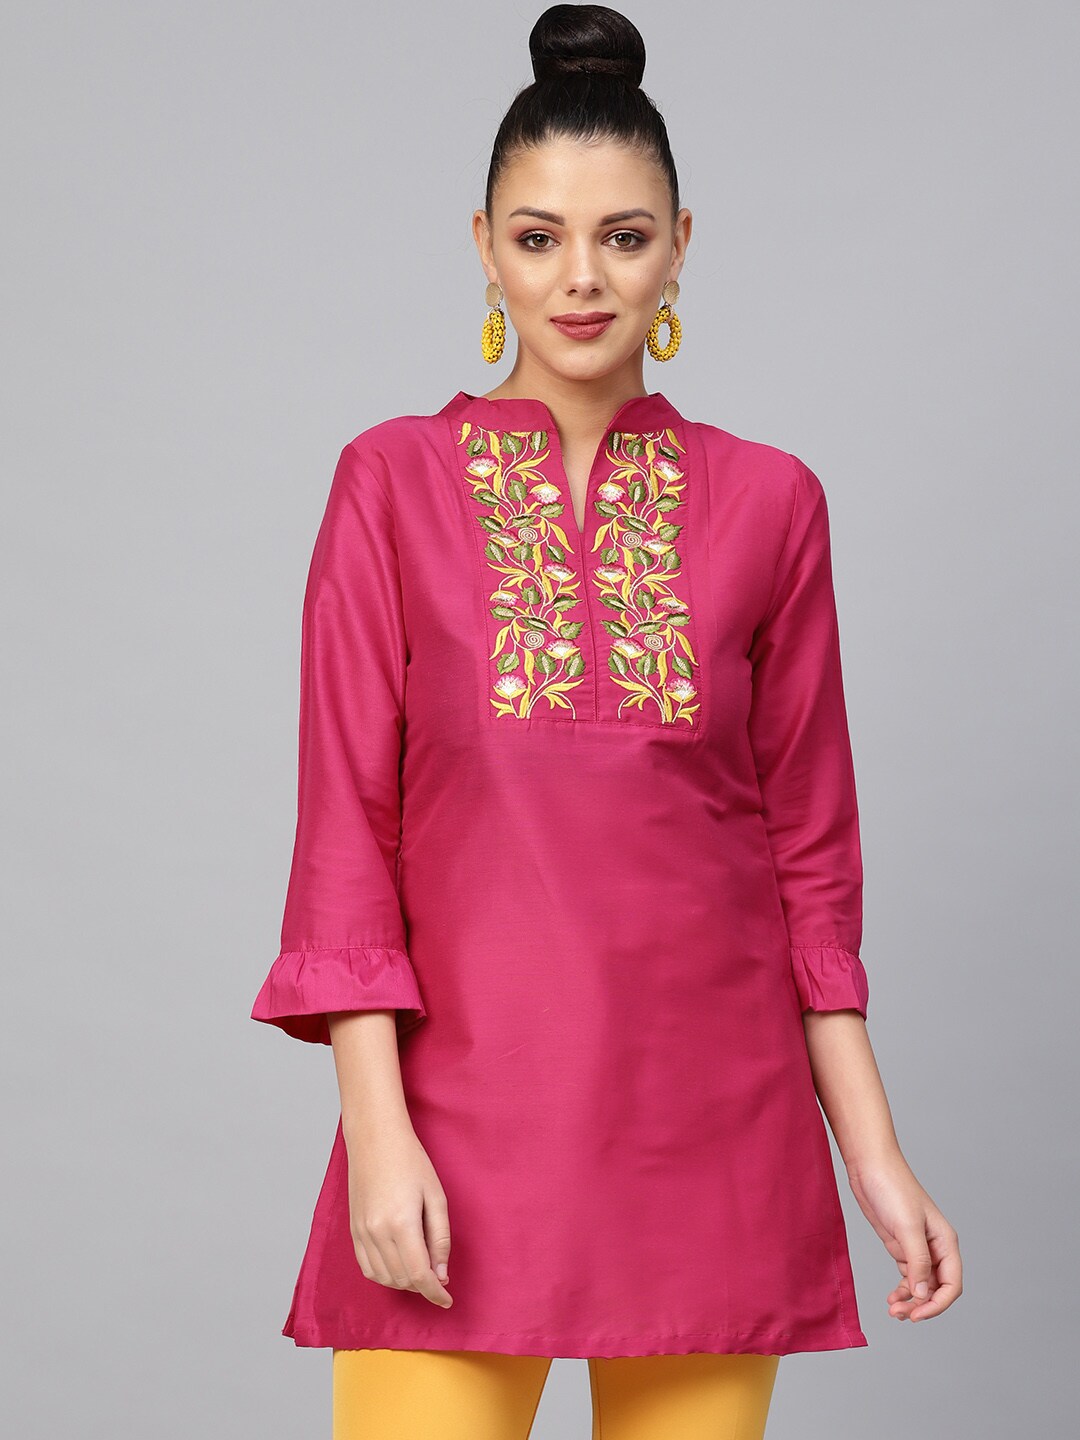 Bhama Couture Women Pink Yoke Design A-Line Kurti Price in India